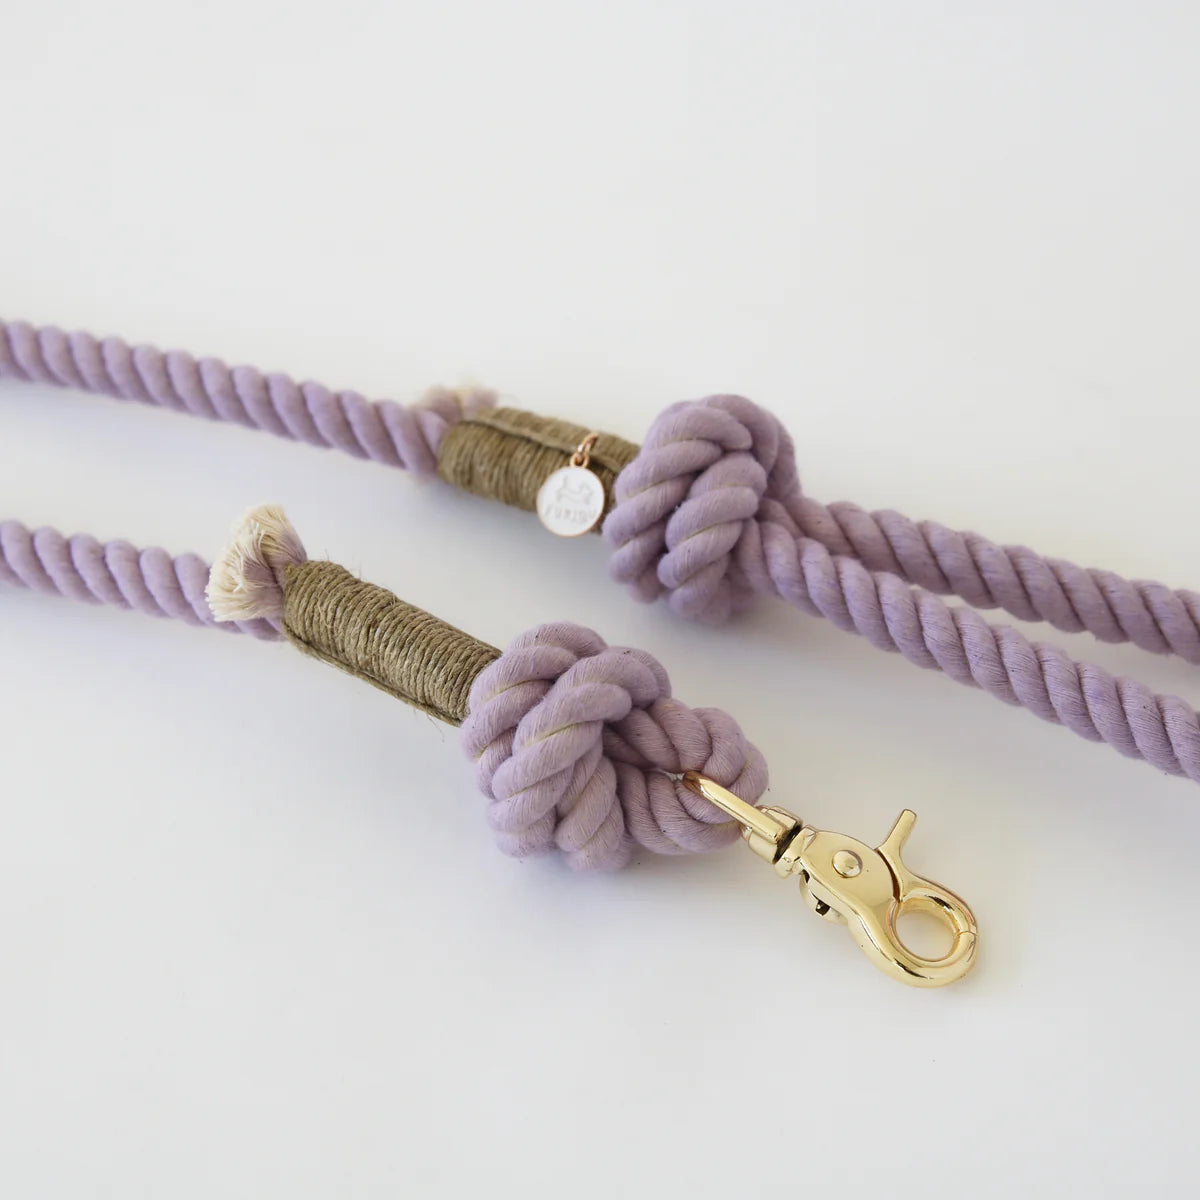 Rope Leash - Lavender Fields